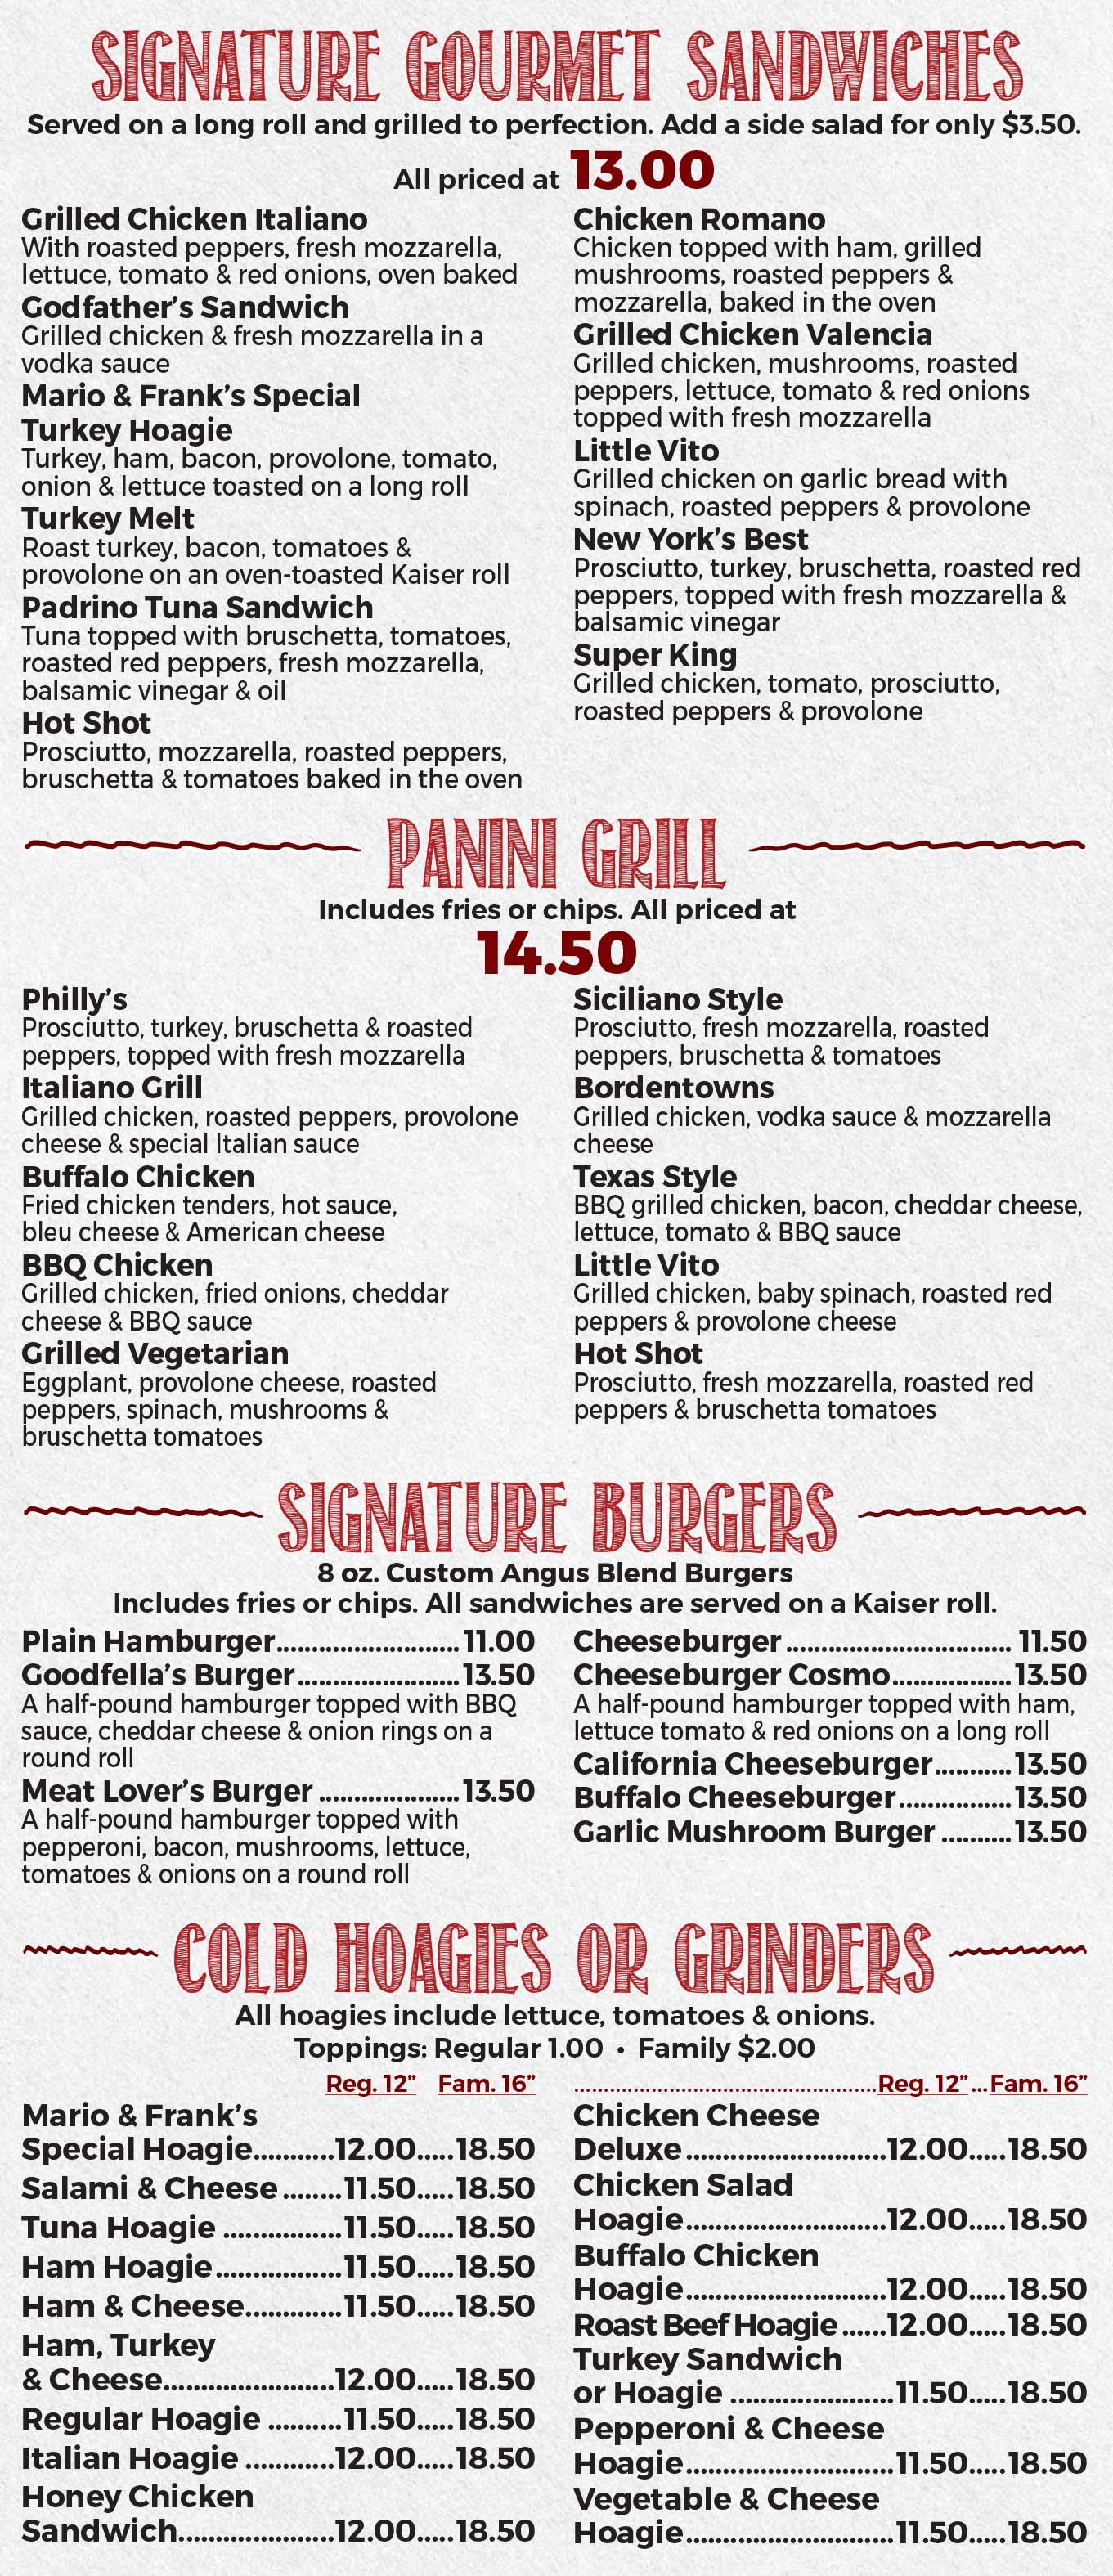 Sandwiches - Panini - Burgers & Hoagie